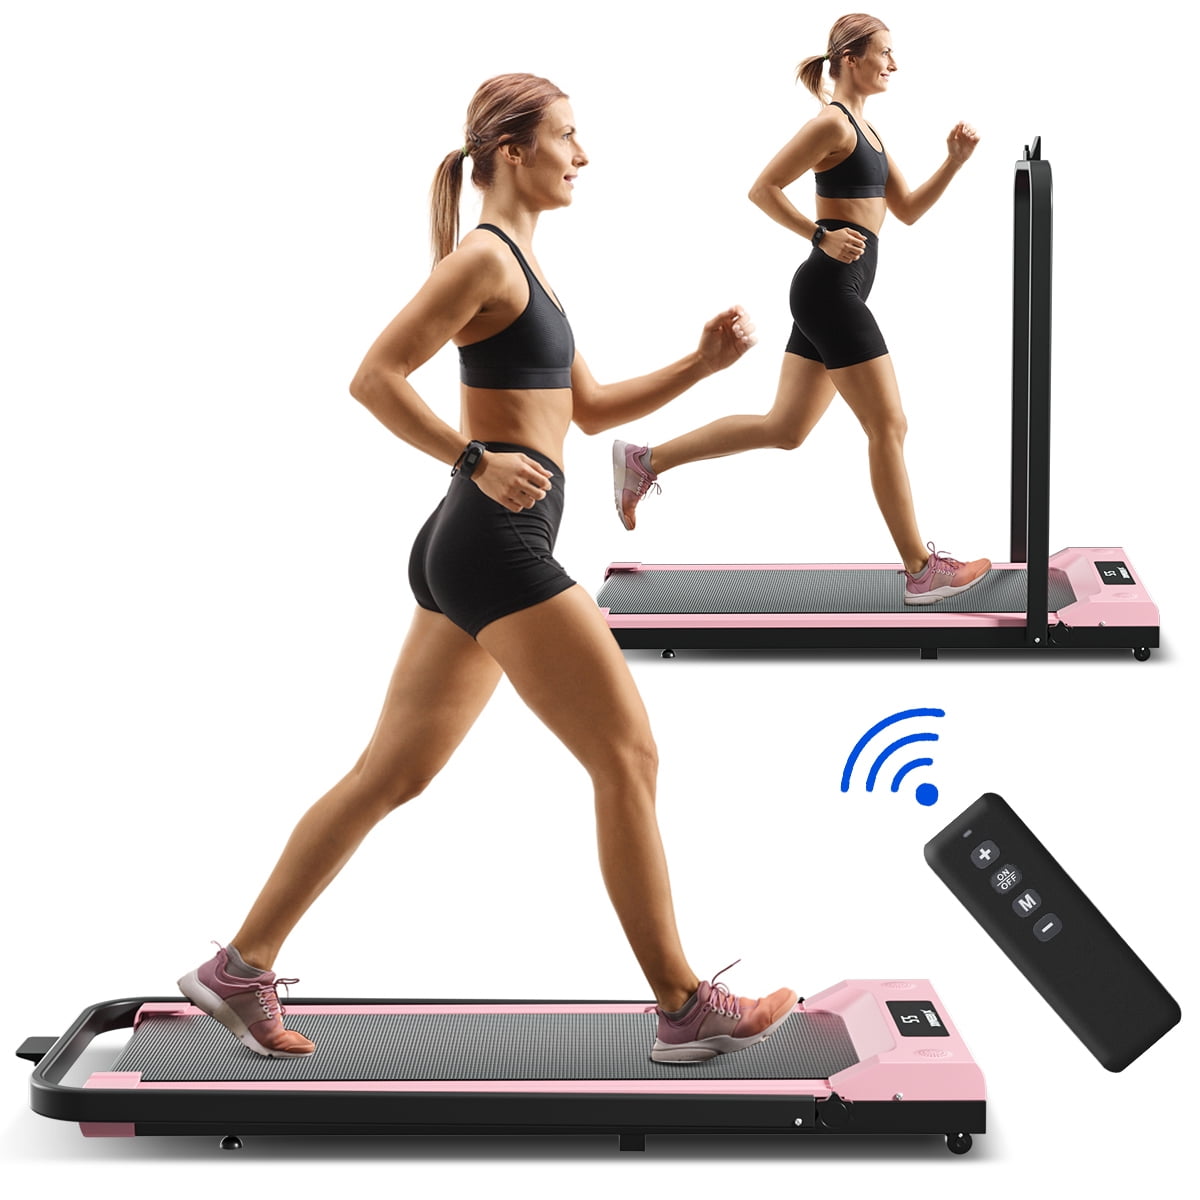 UREVO Mini Folding Treadmills for Home,1.5HP Under Desk Electric Treadmill Workout Running Machine Mini Foldable Portable Compact Treadmill